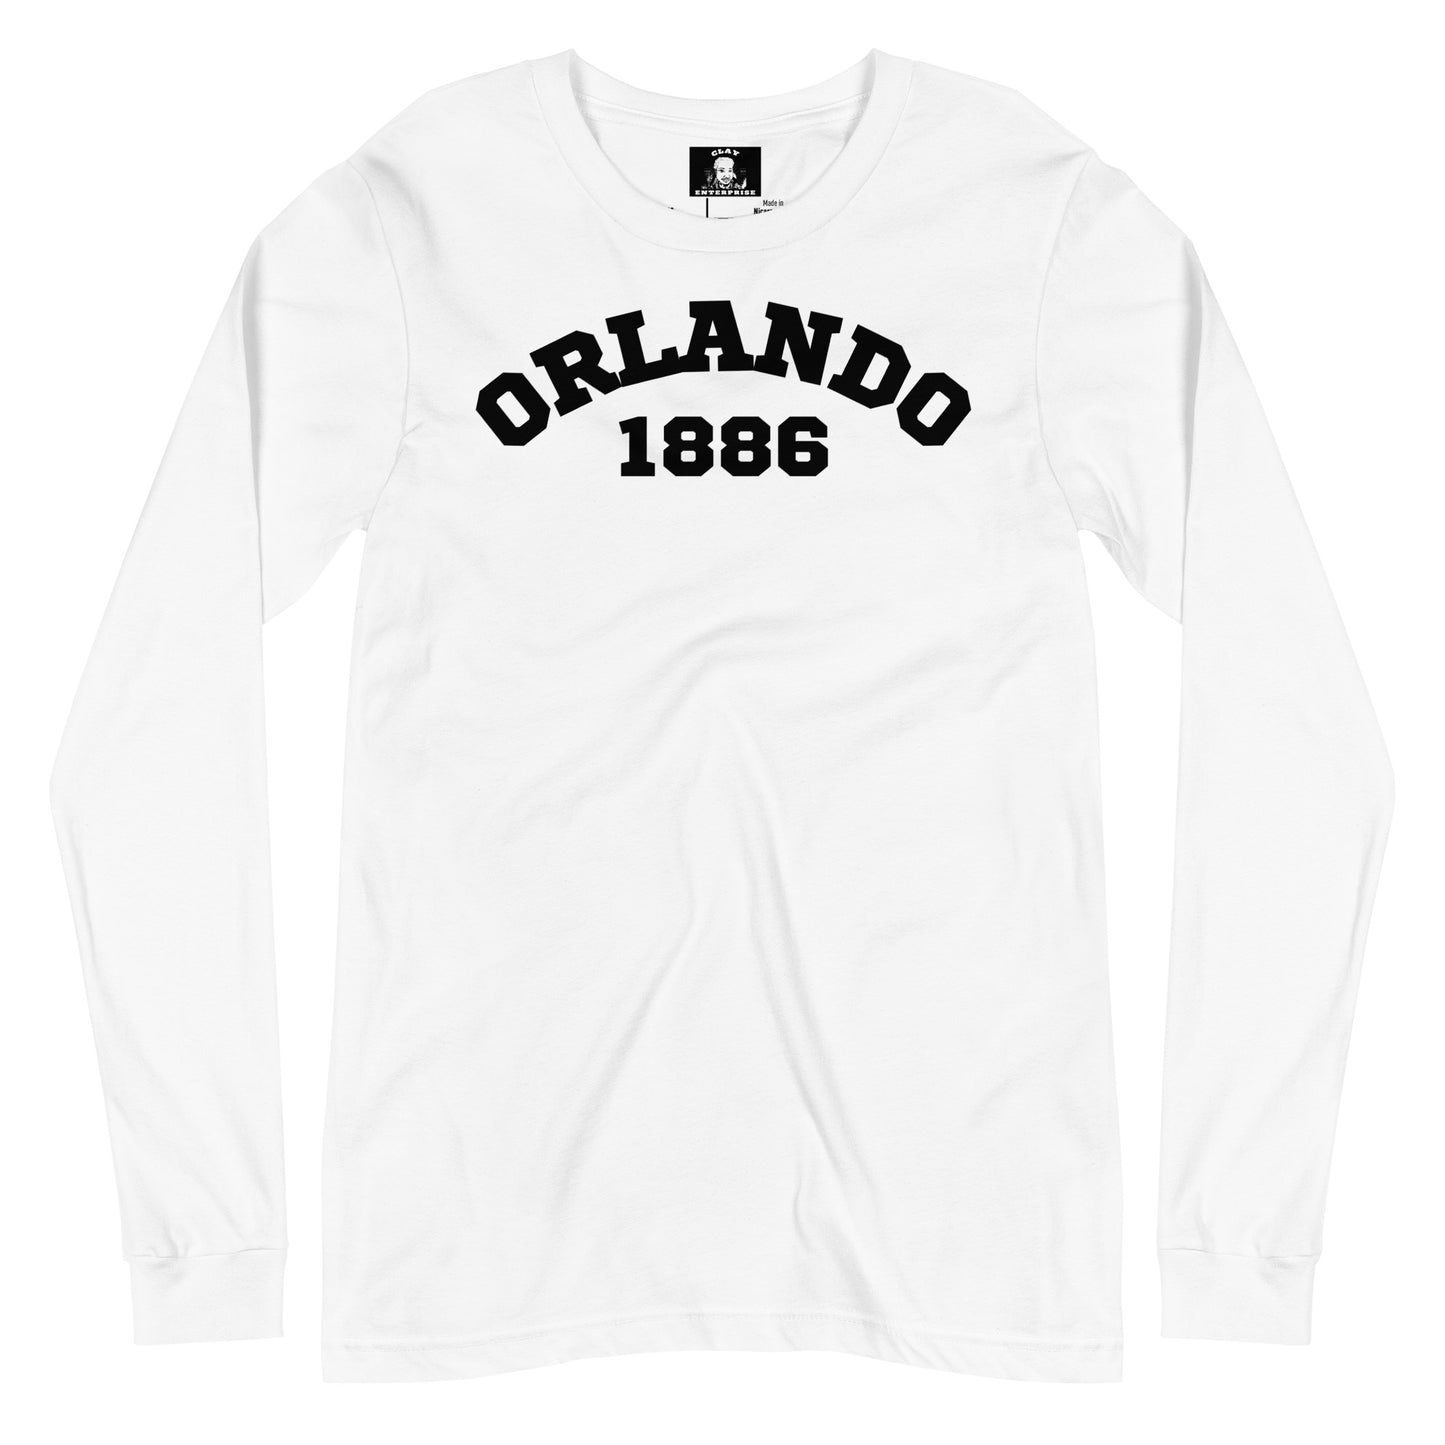 "Orlando 1886" black-font Long-Sleeve Shirt